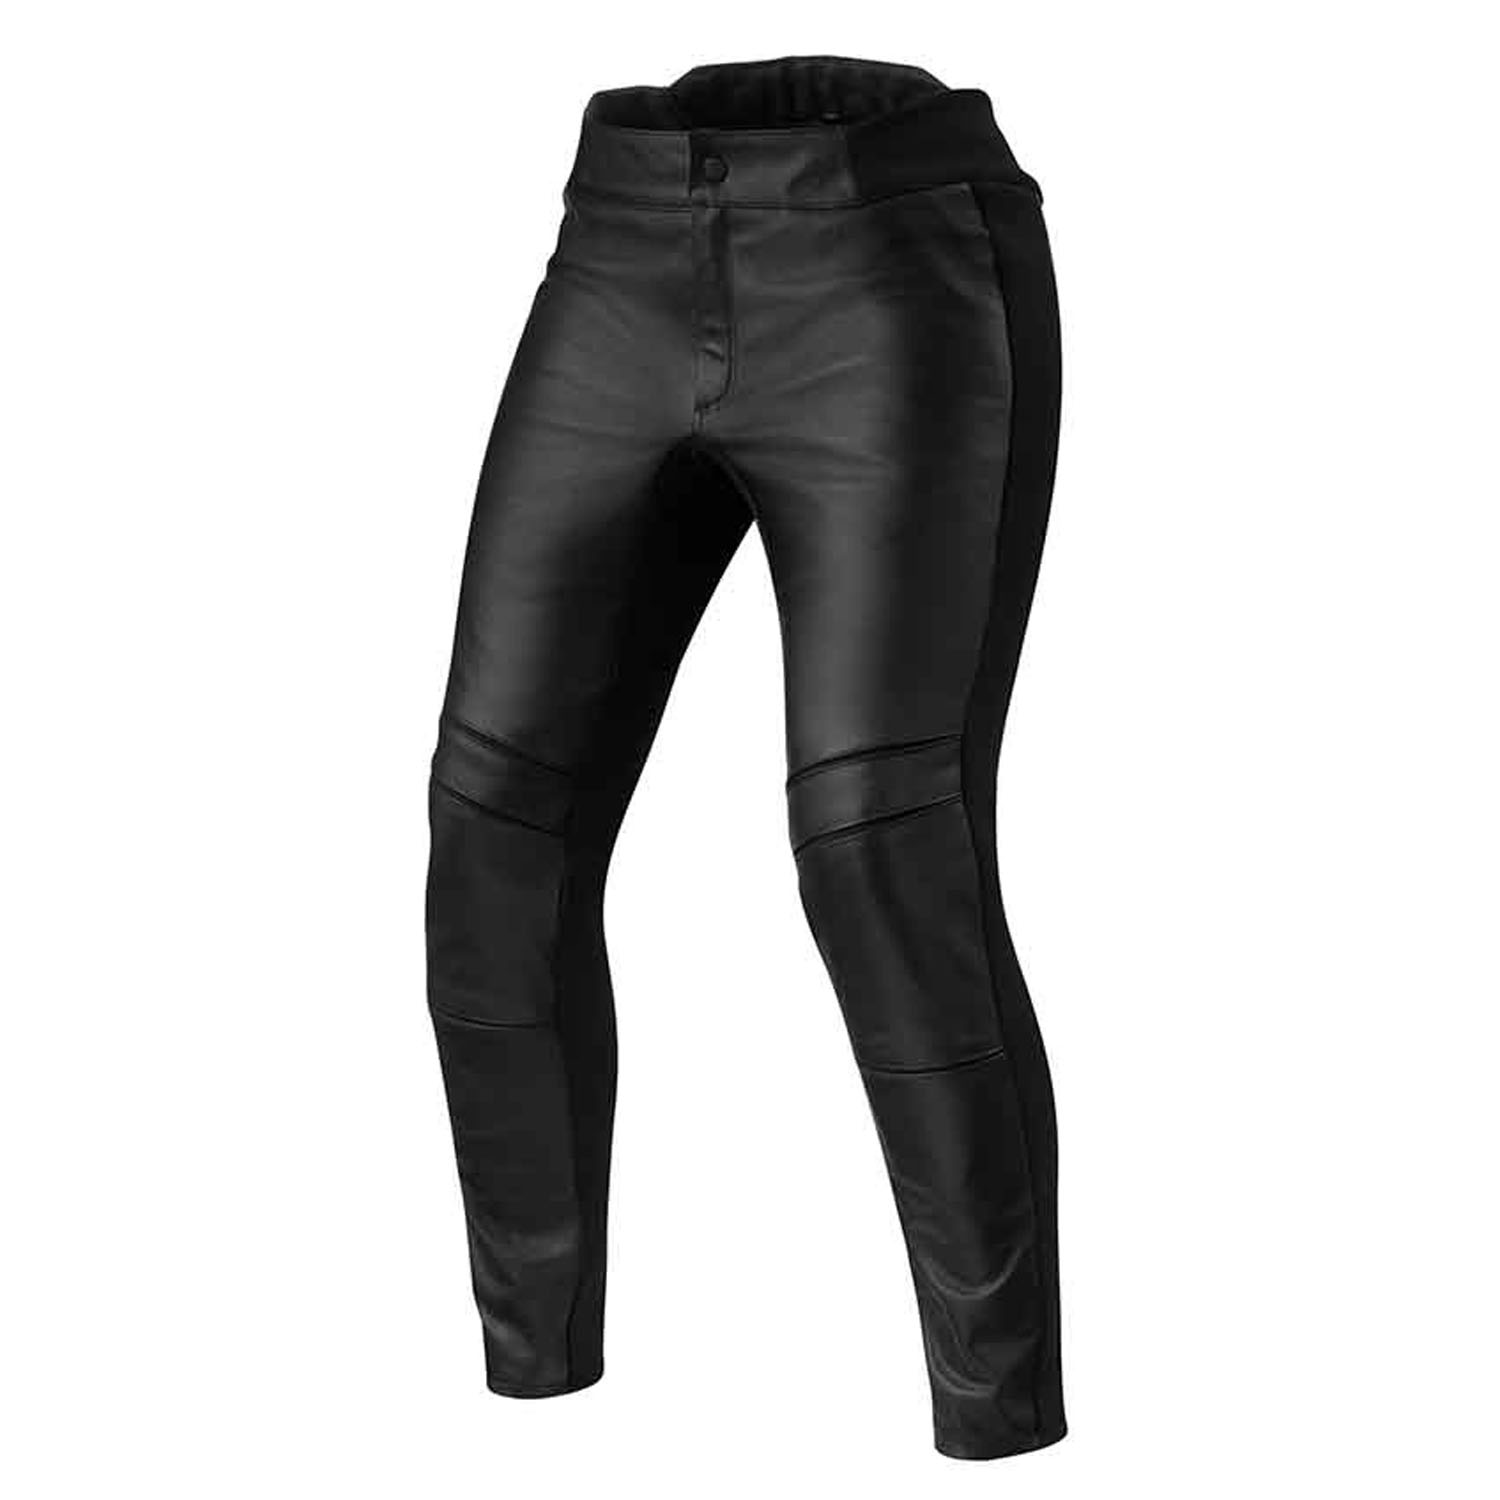 Image of REV'IT! Maci Ladies Black Short Motorcycle Pants Taille 38